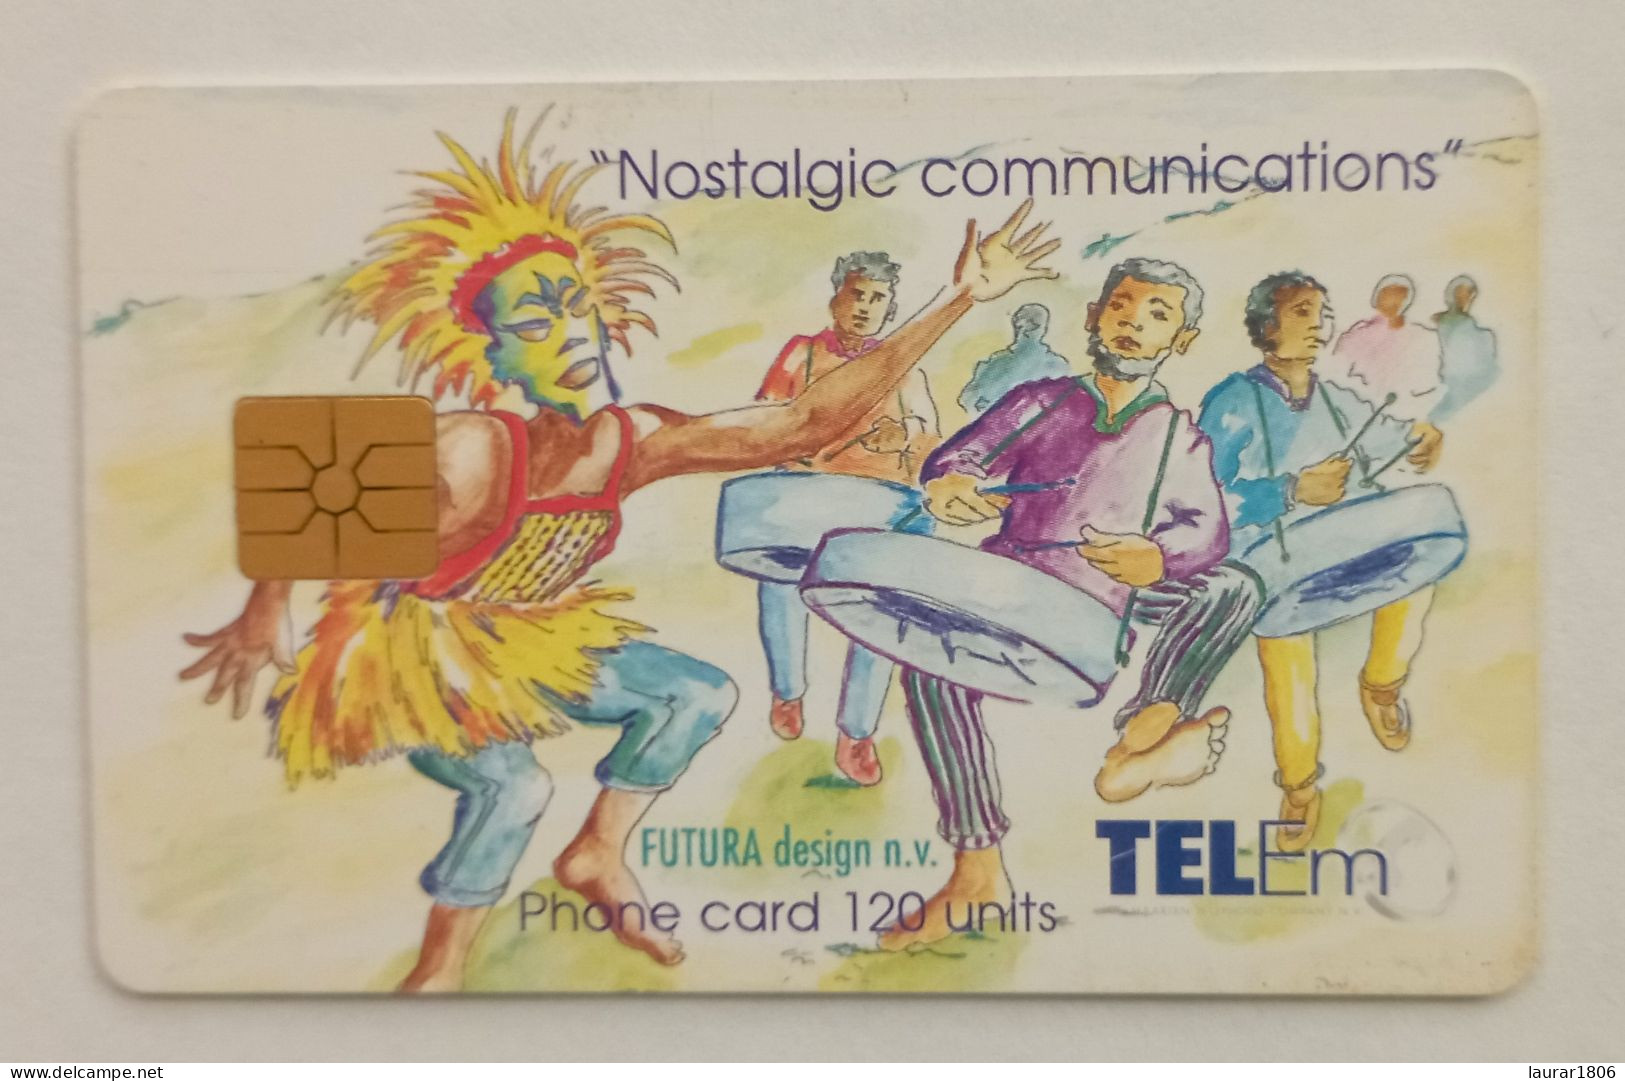 TELECARTE PHONECARD ANTILLES NEERLANDAISES - TEL-EM N.V. - GEM1B White - NOSTALGIC COMMUNICATIONS - 120 Unités - EC - Antillen (Niederländische)